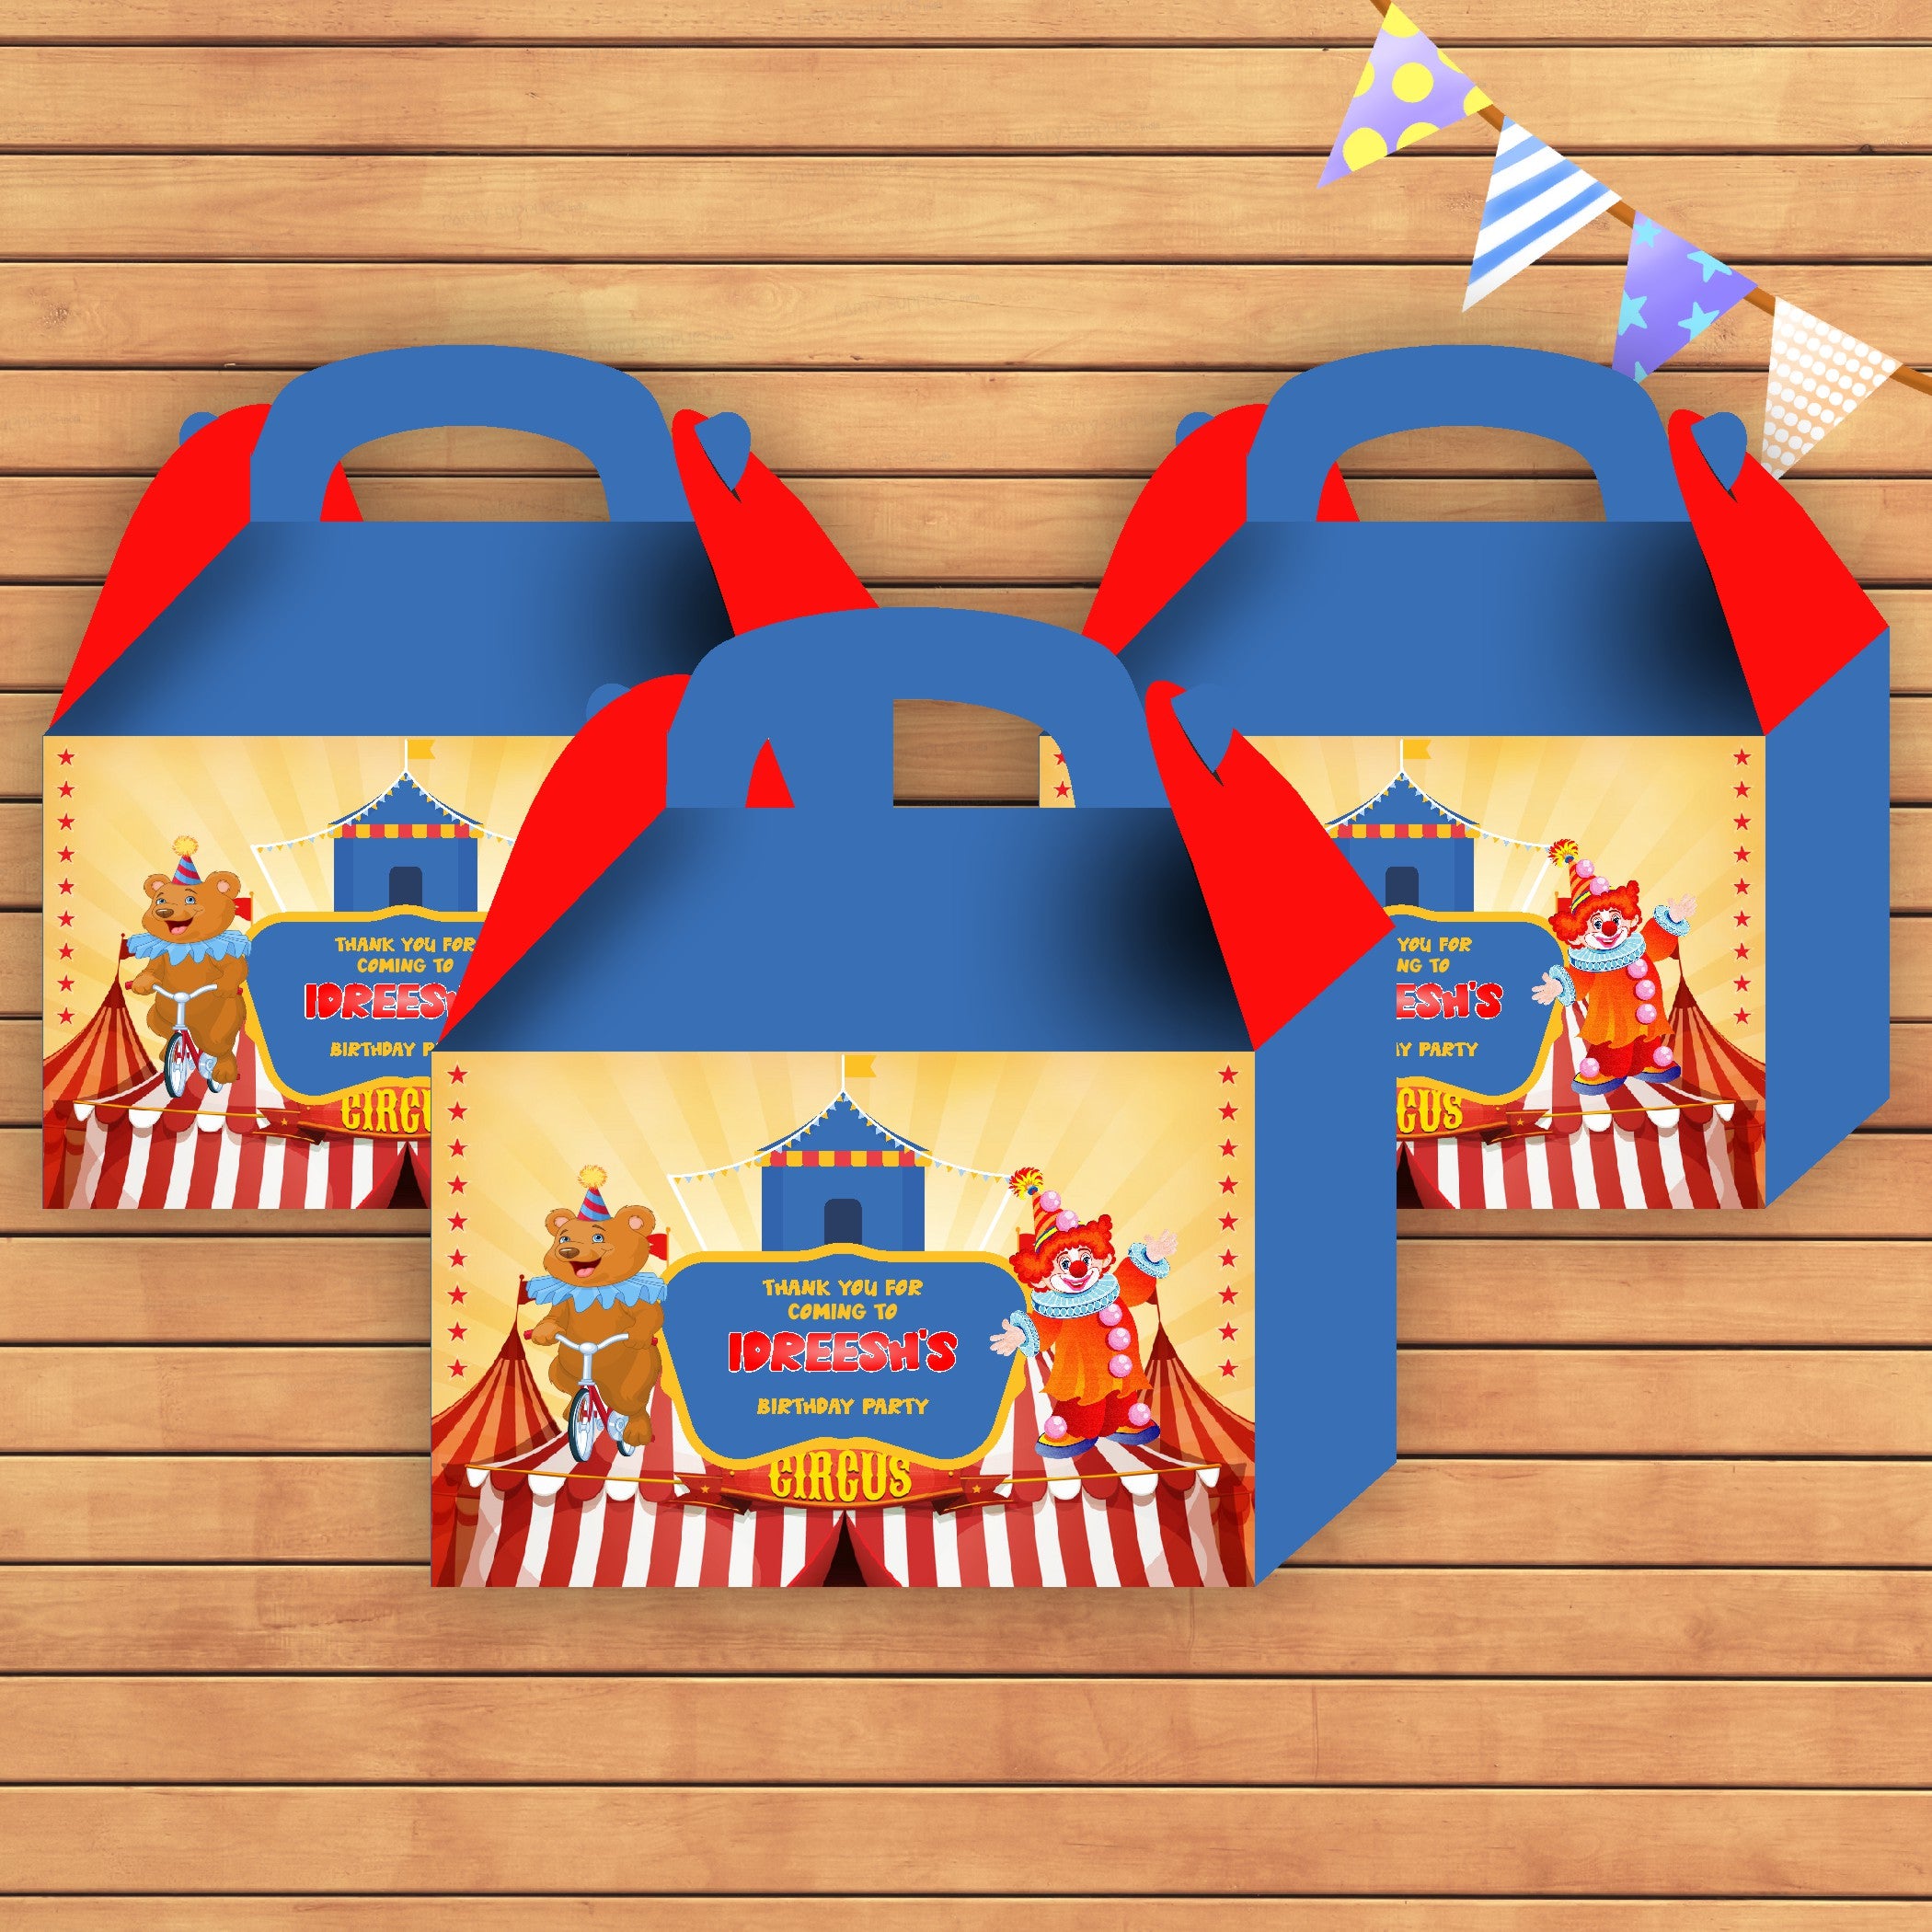 PSI Circus Theme Goodie Return Gift Boxes